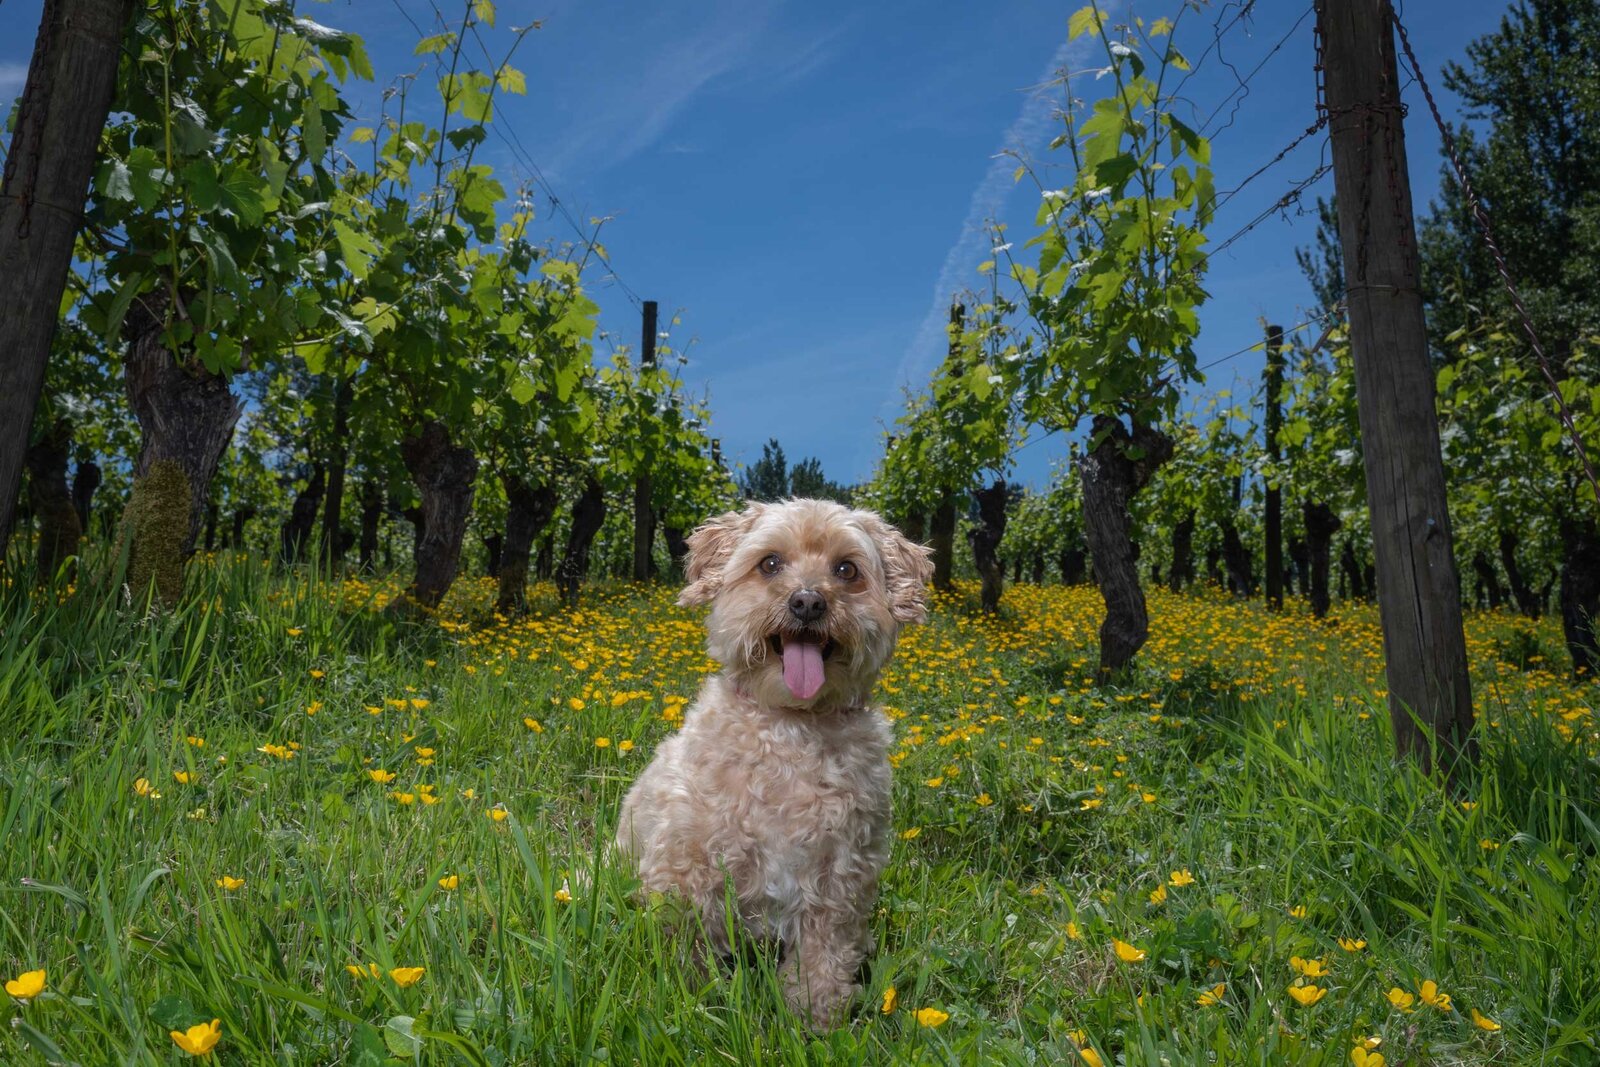 Dog posing in field